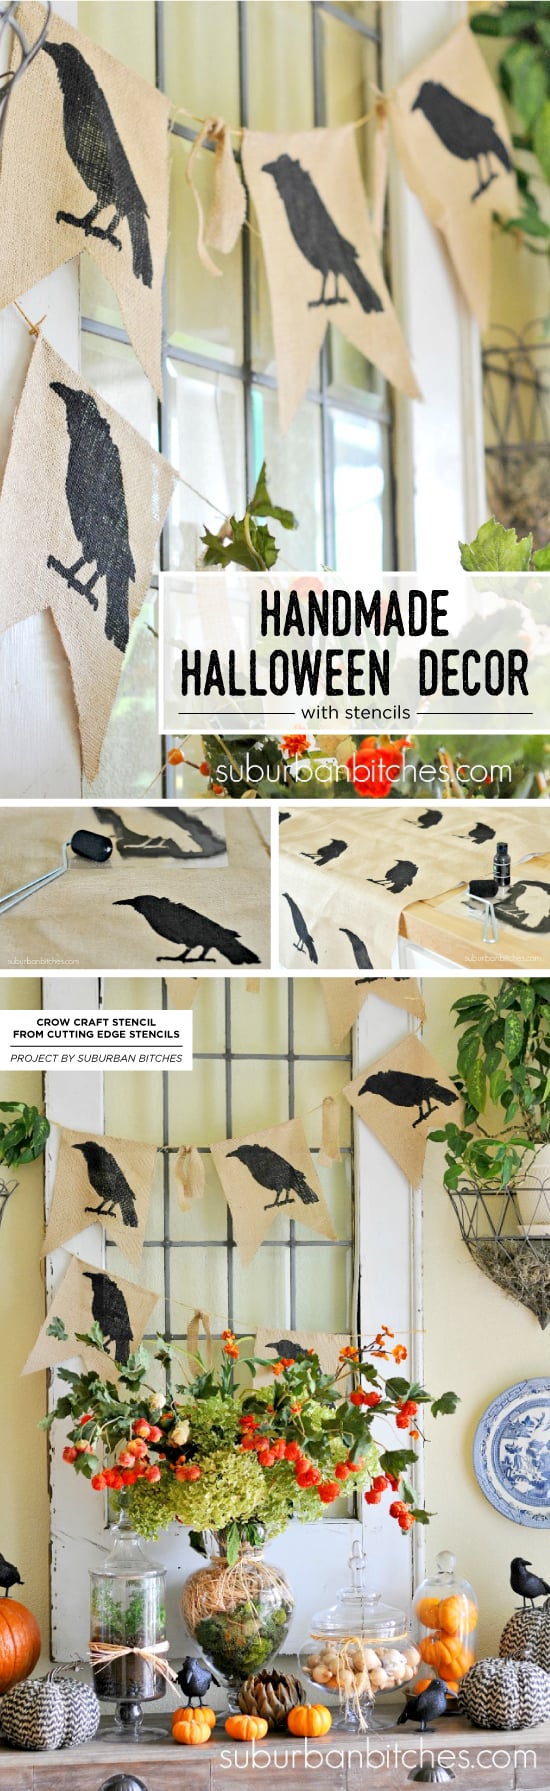 Cutting Edge Stencils shares how to create DIY handmade Halloween decorations using craft stencils. http://www.cuttingedgestencils.com/halloween-stencils-crow-stencil-design-diy-craft.html